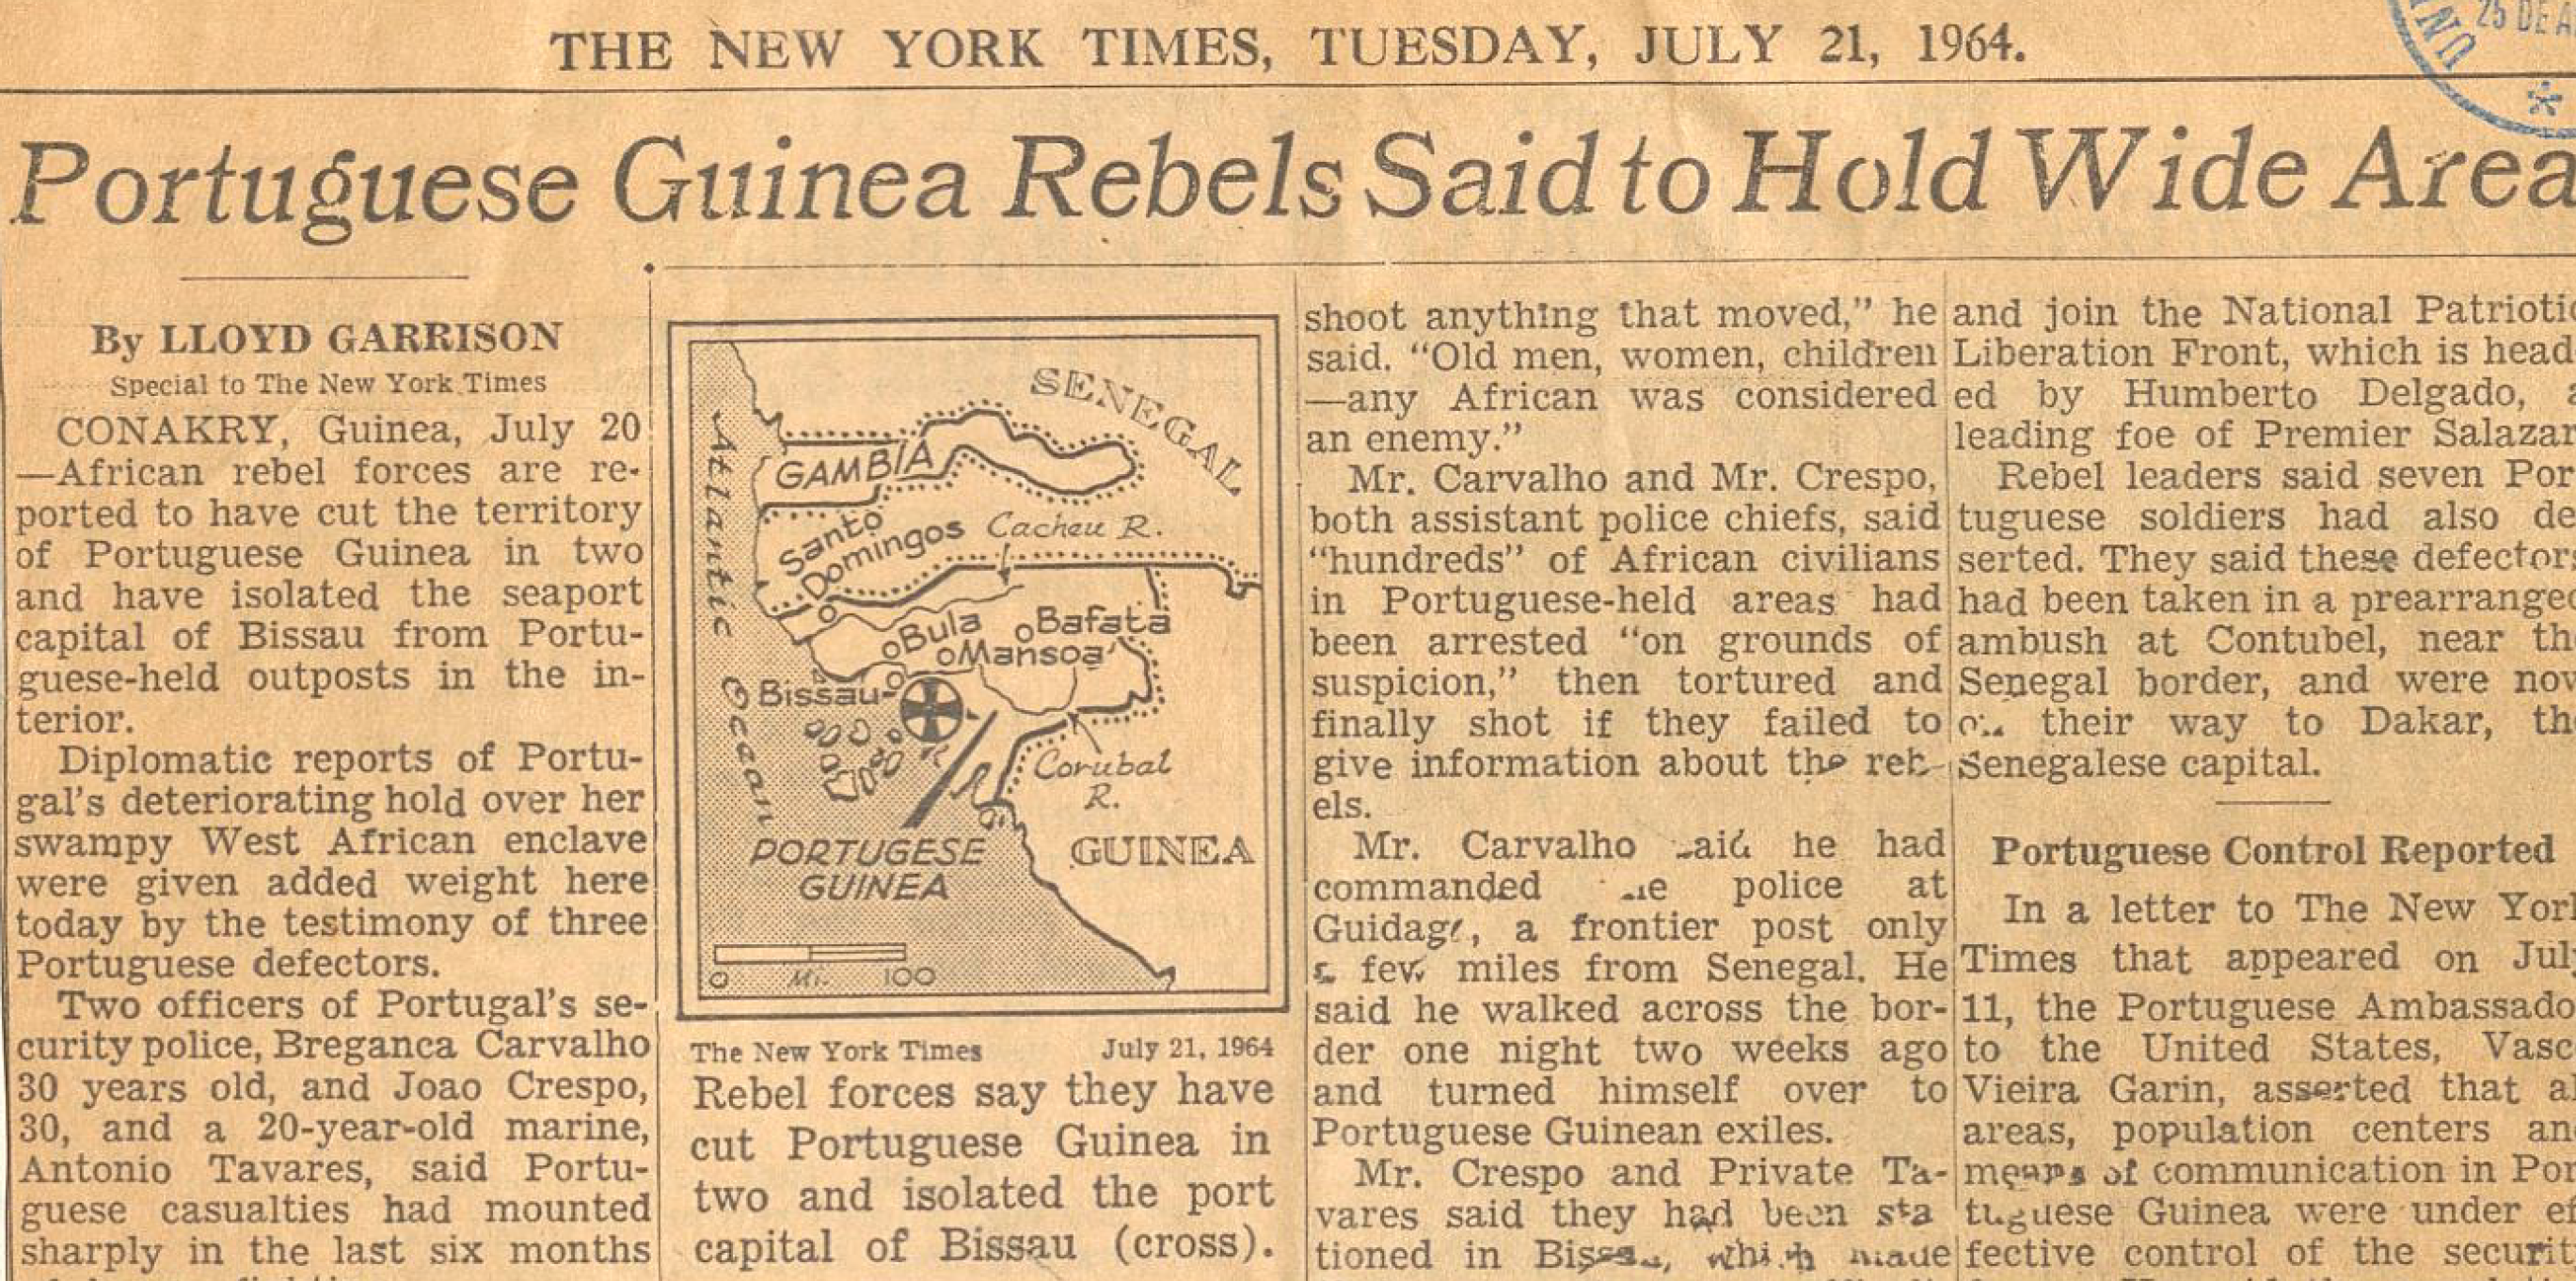 "Portuguese Guinea Rebels said to hold wide area"